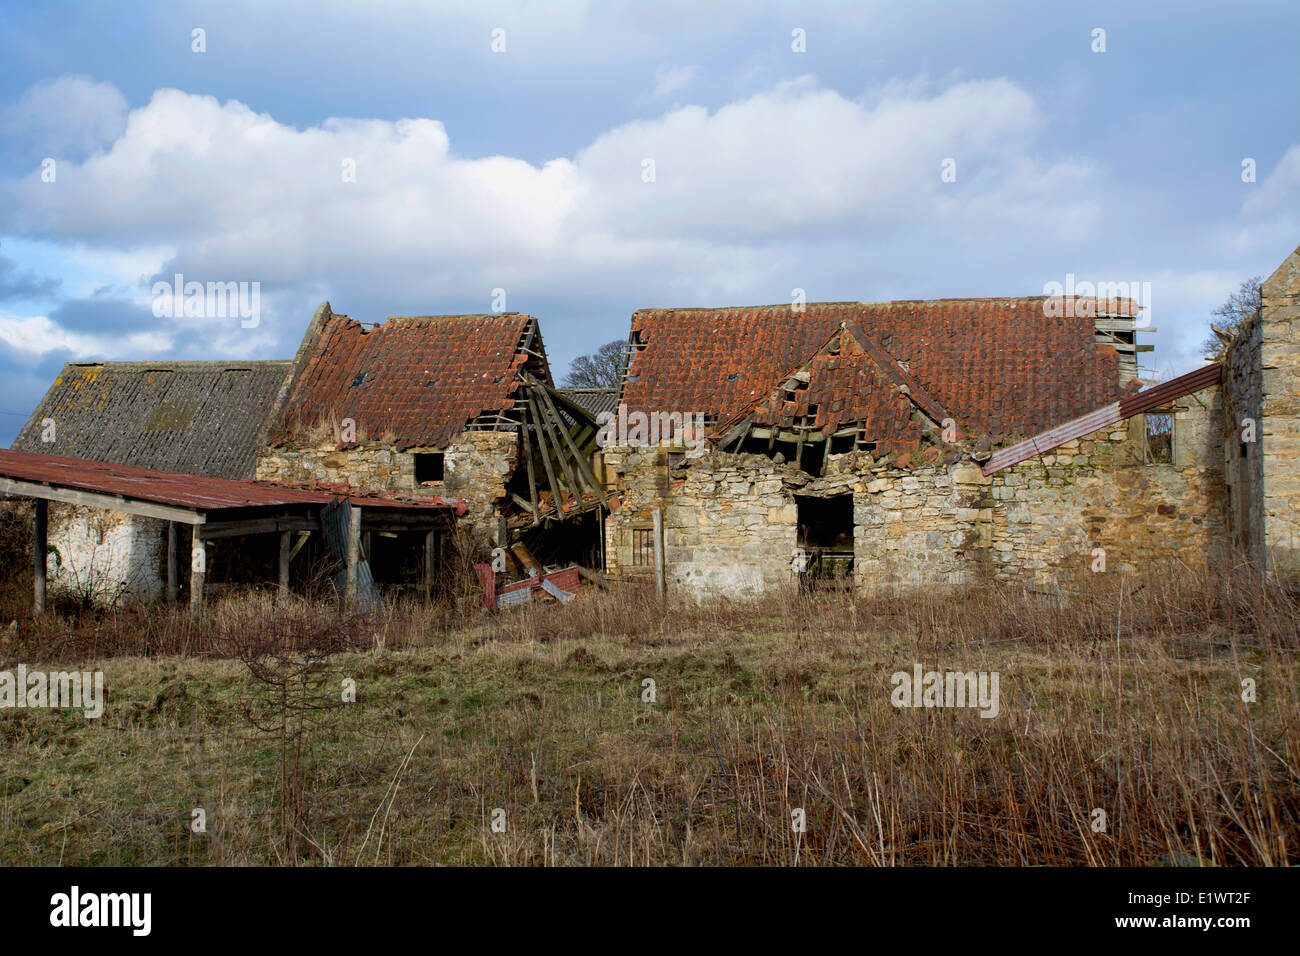 Abandoned, derelict farm buildings Stock Photo